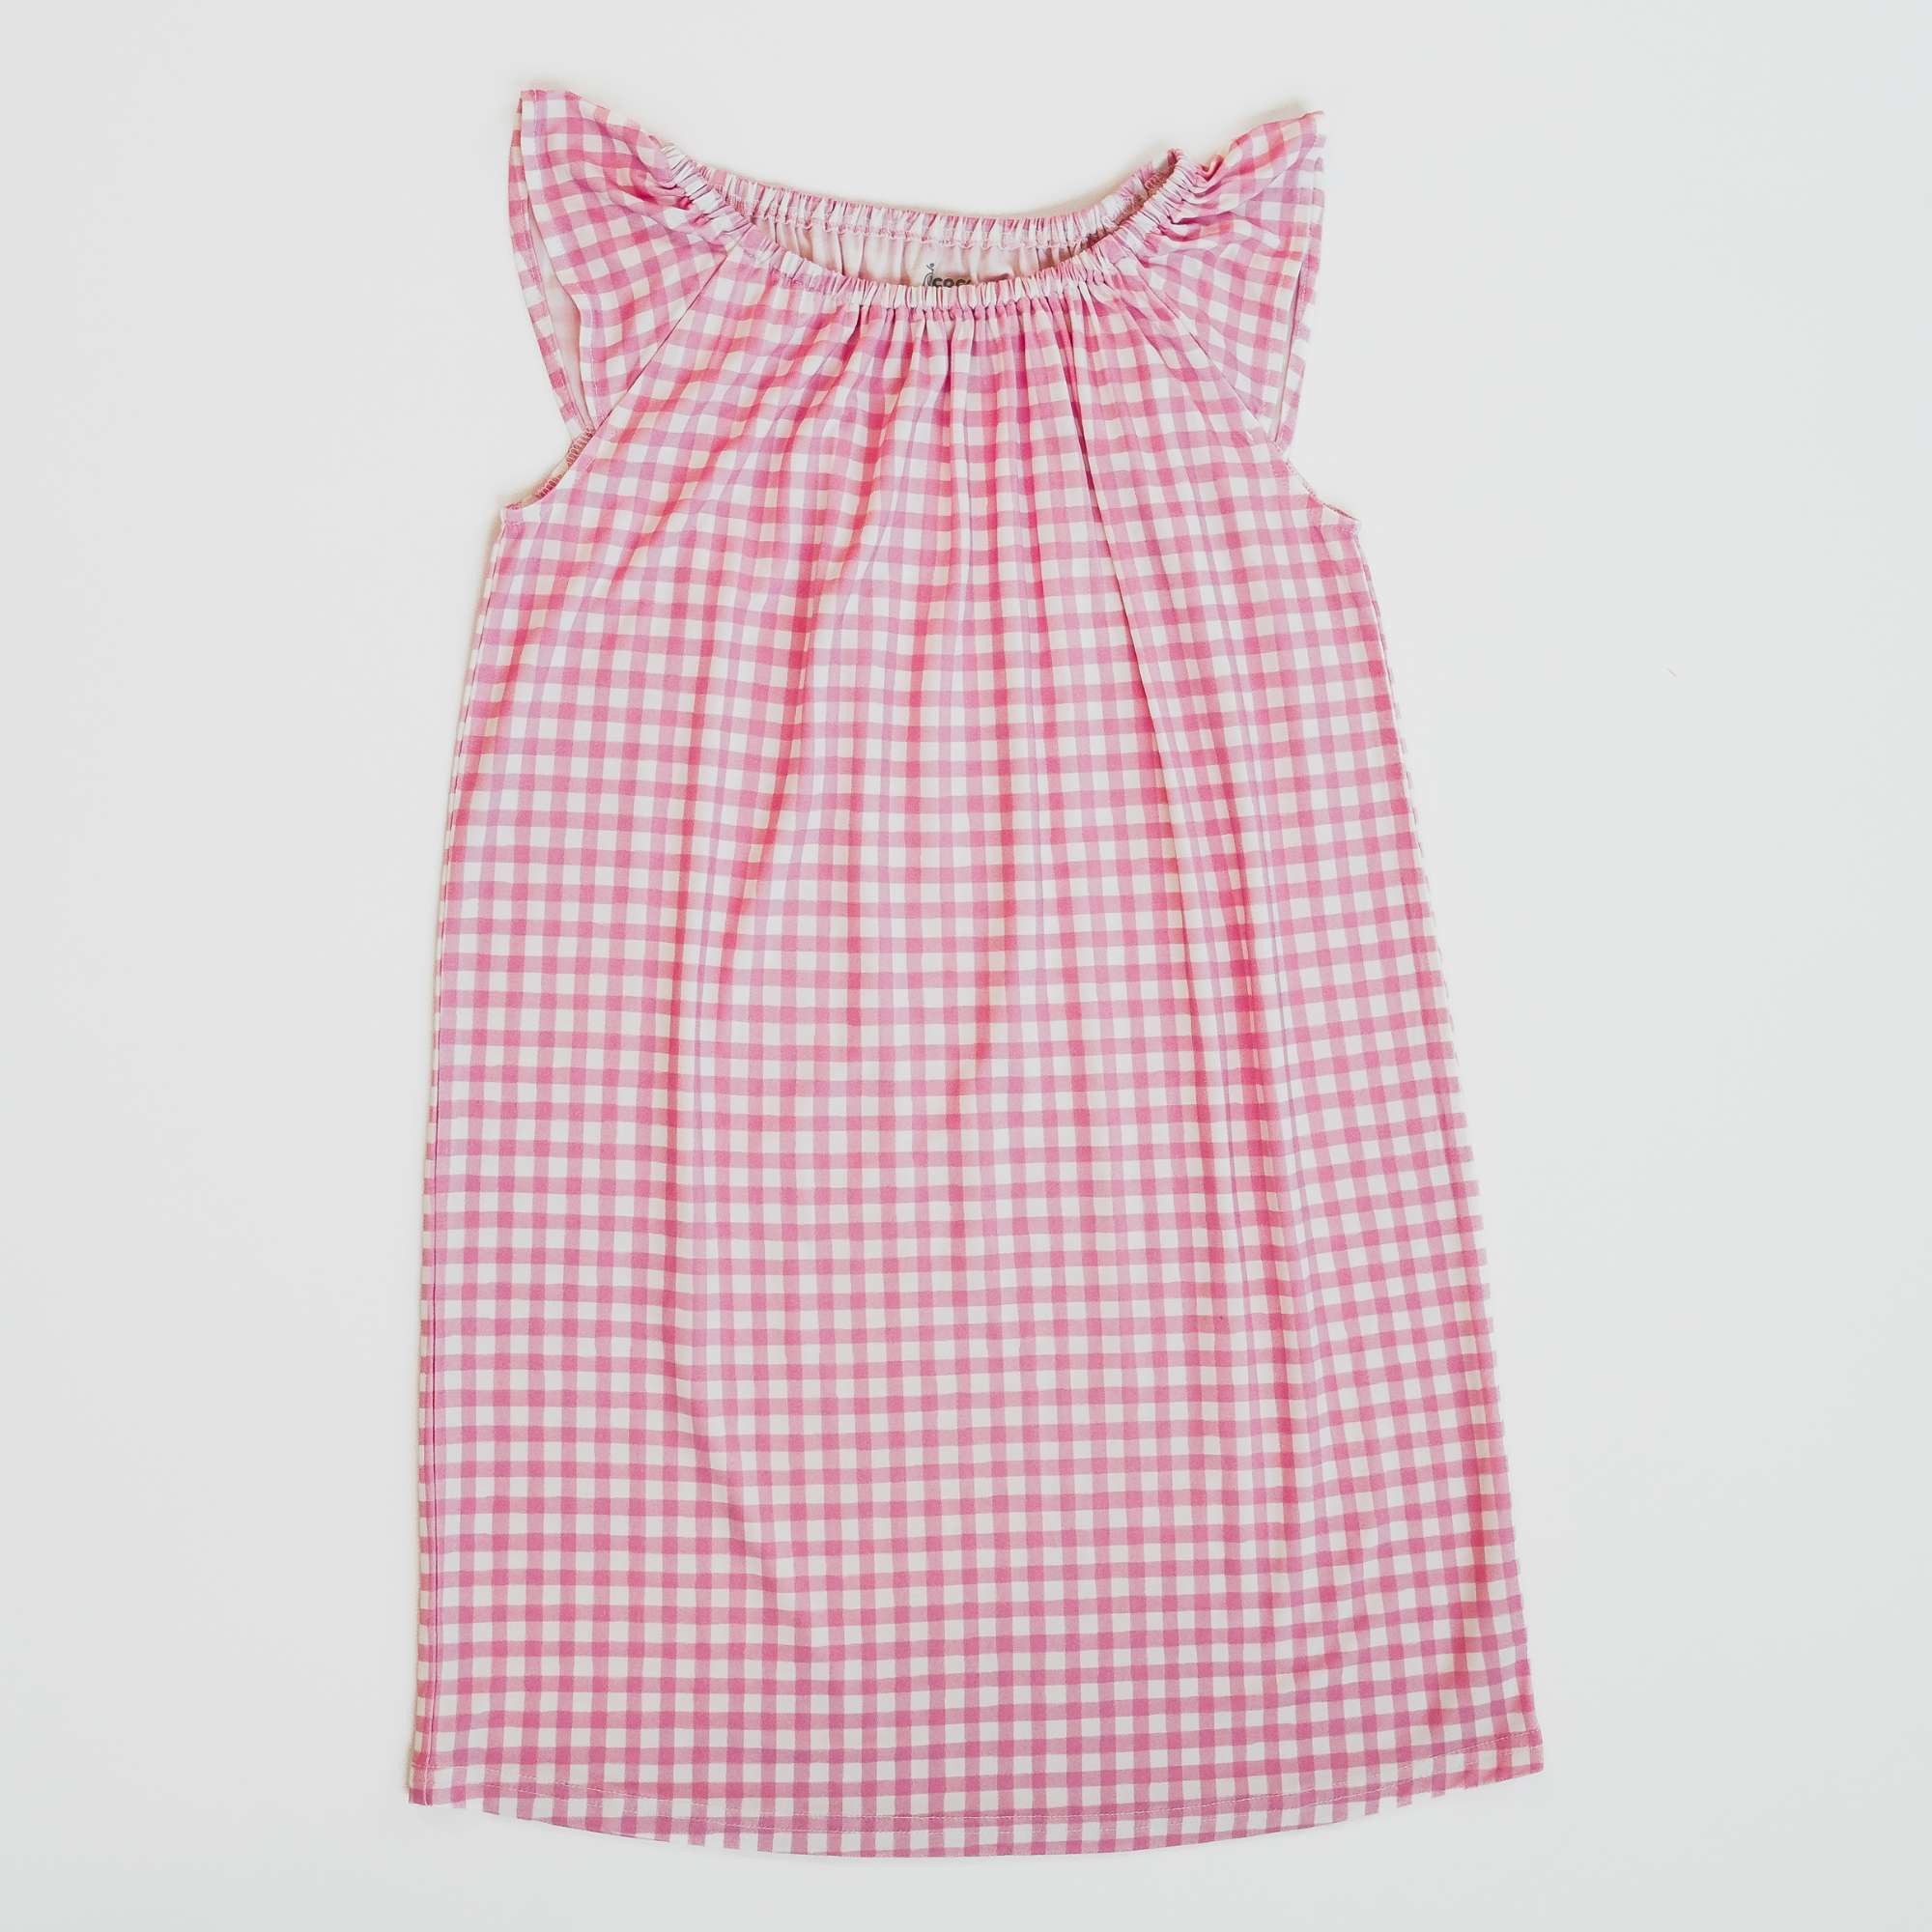 bamboo toddler nightgown - pink gingham